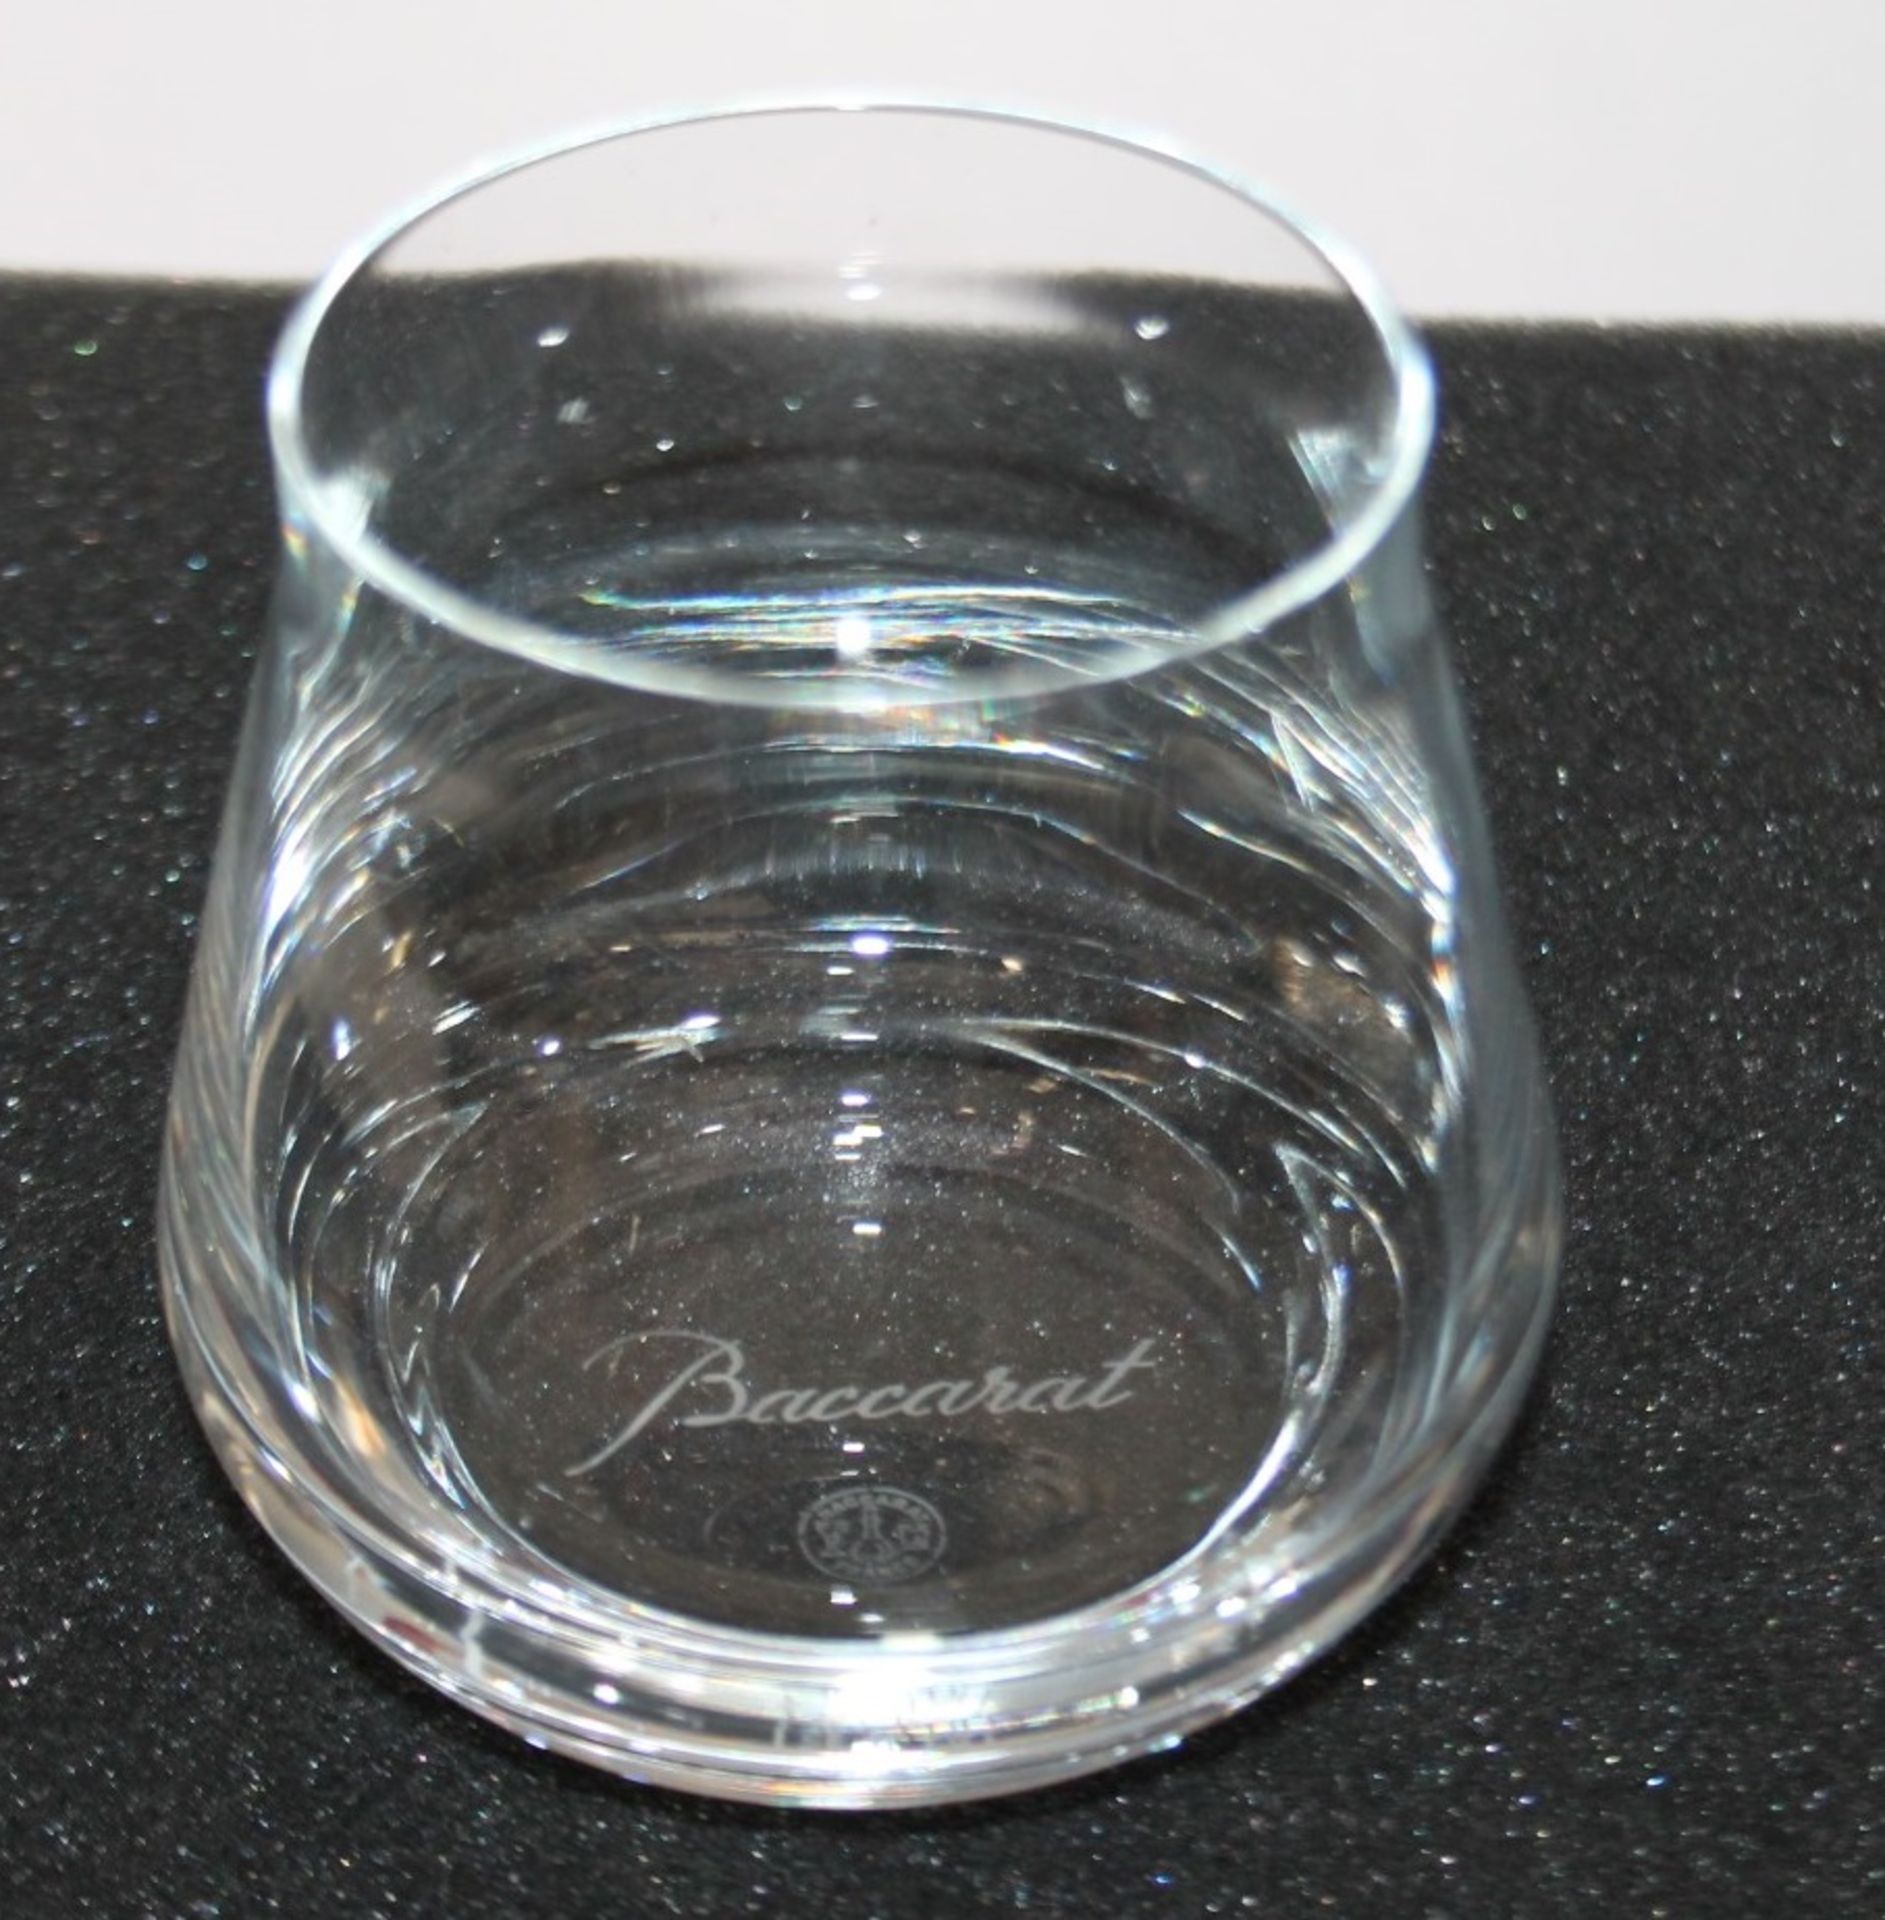 3 x Assorted BACCARAT 'Chateau Baccarat' Degustation Crystal Glasses - Original Total Value £180. - Image 5 of 7